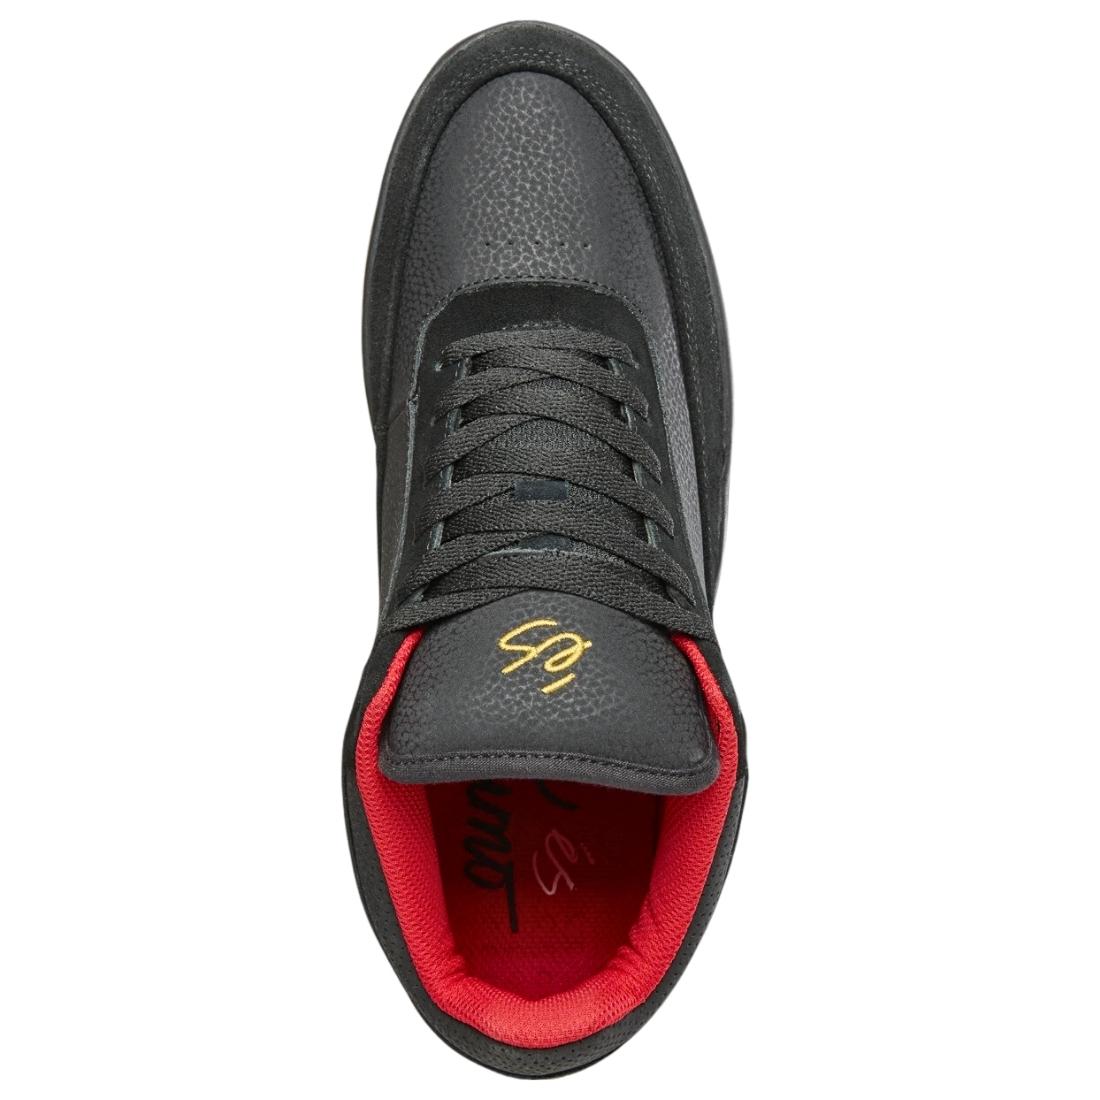 Es Stylus Mid X Wade Desarmo Skate Shoes - Black/Red - Mens Skate Shoes by eS